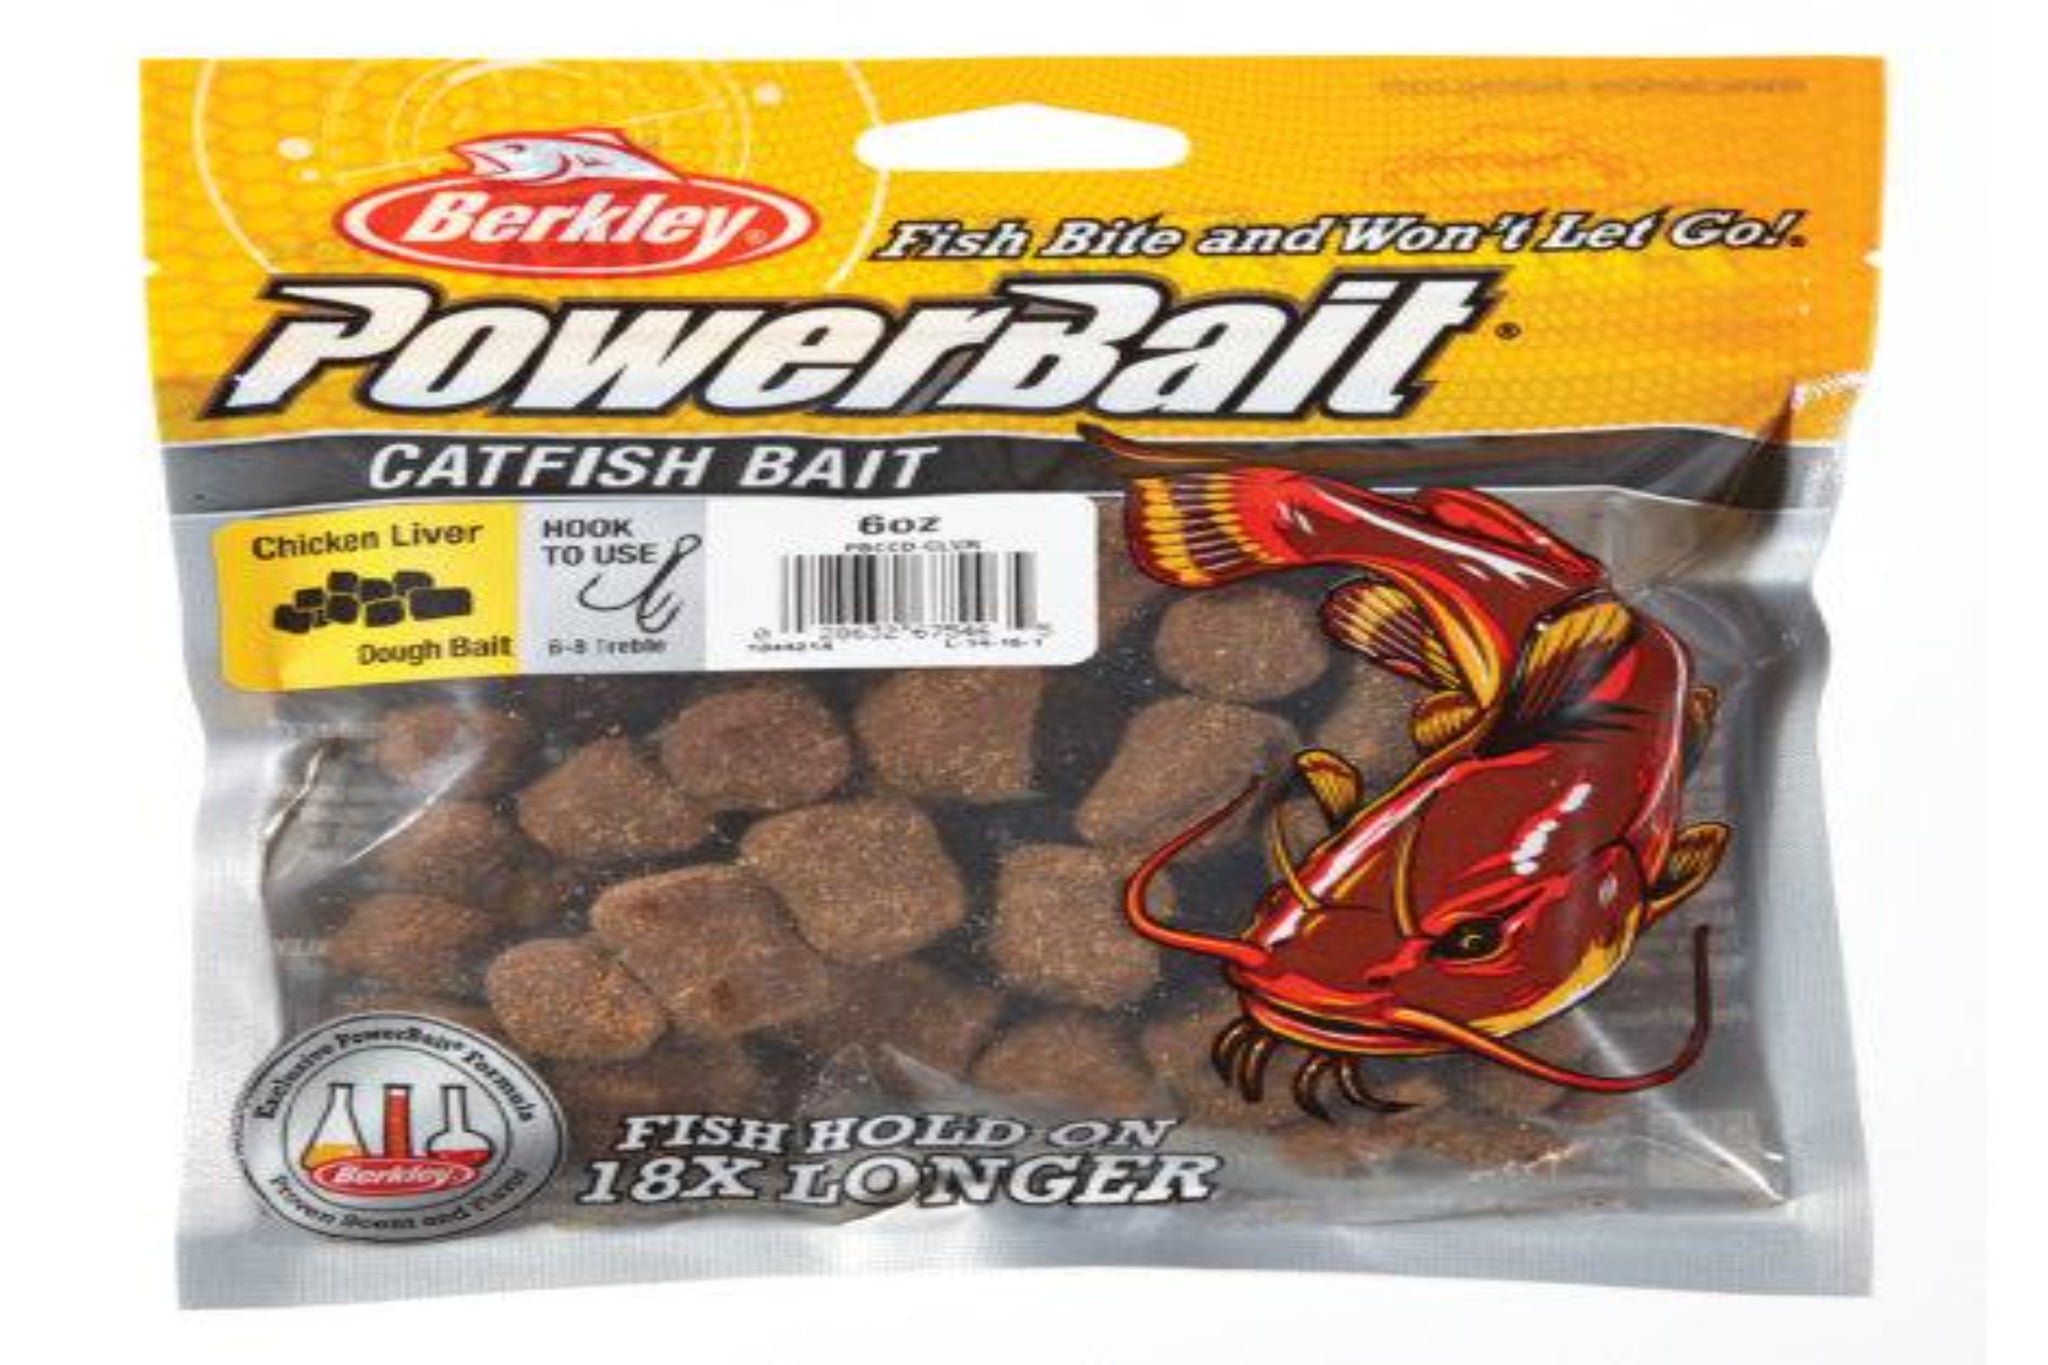 Berkley powerbait Catfish Bait - The Fishing Specialist